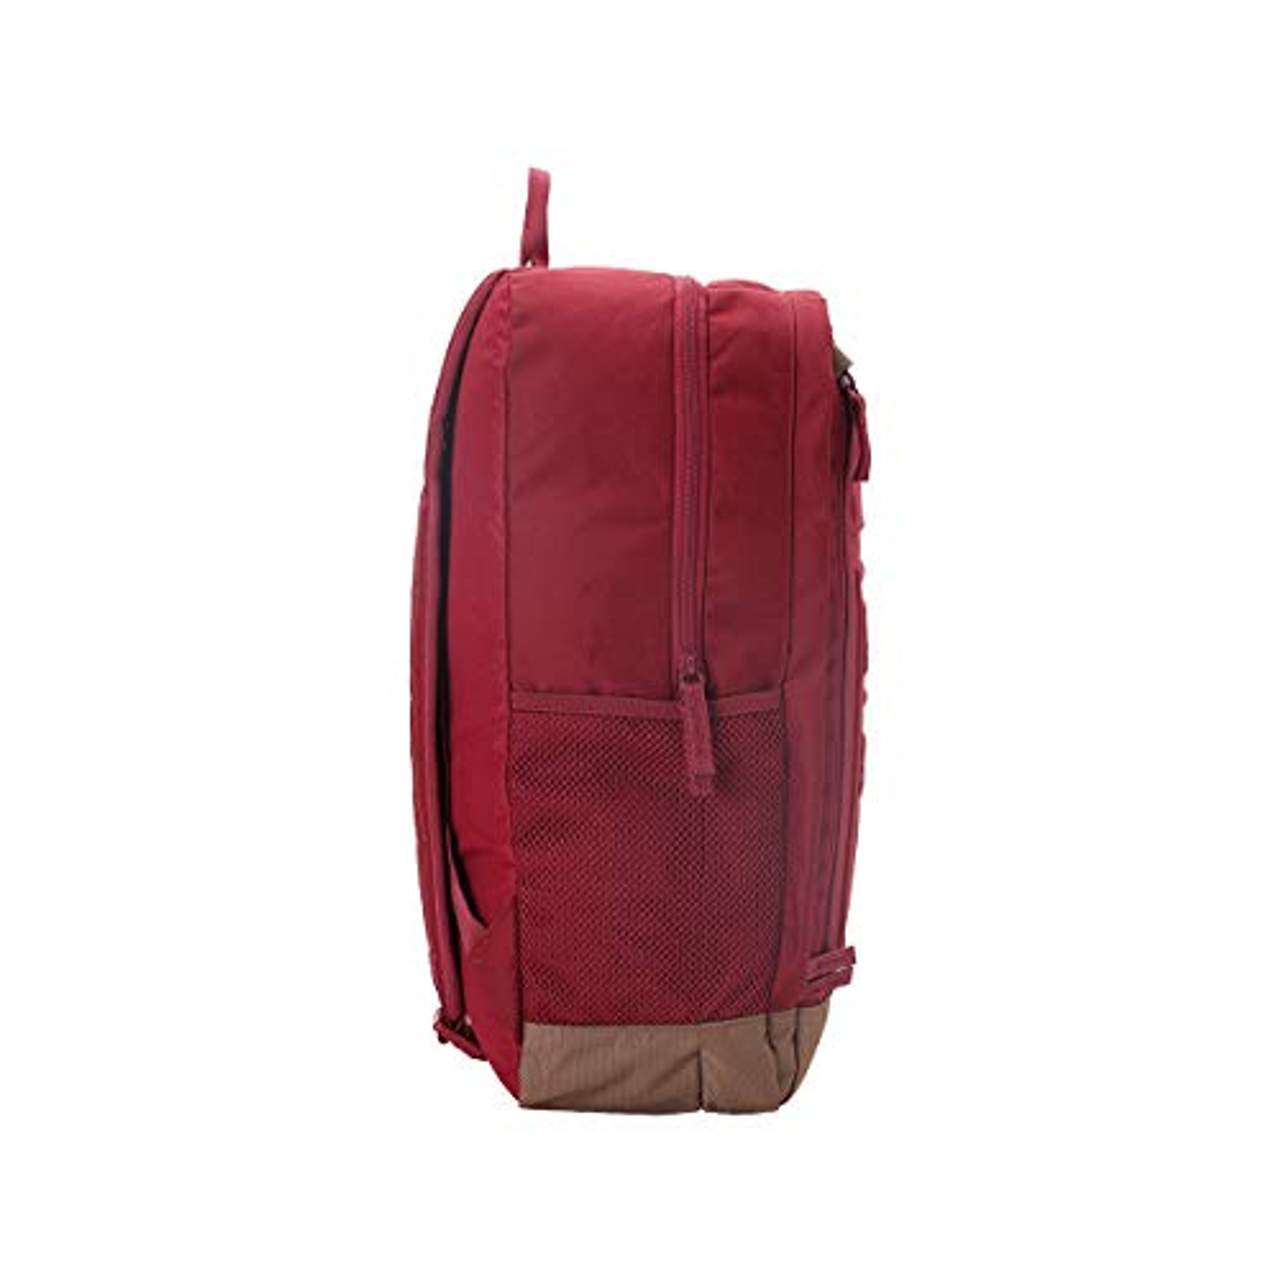 PUMA Unisex Erwachsene S Backpack Rucksack